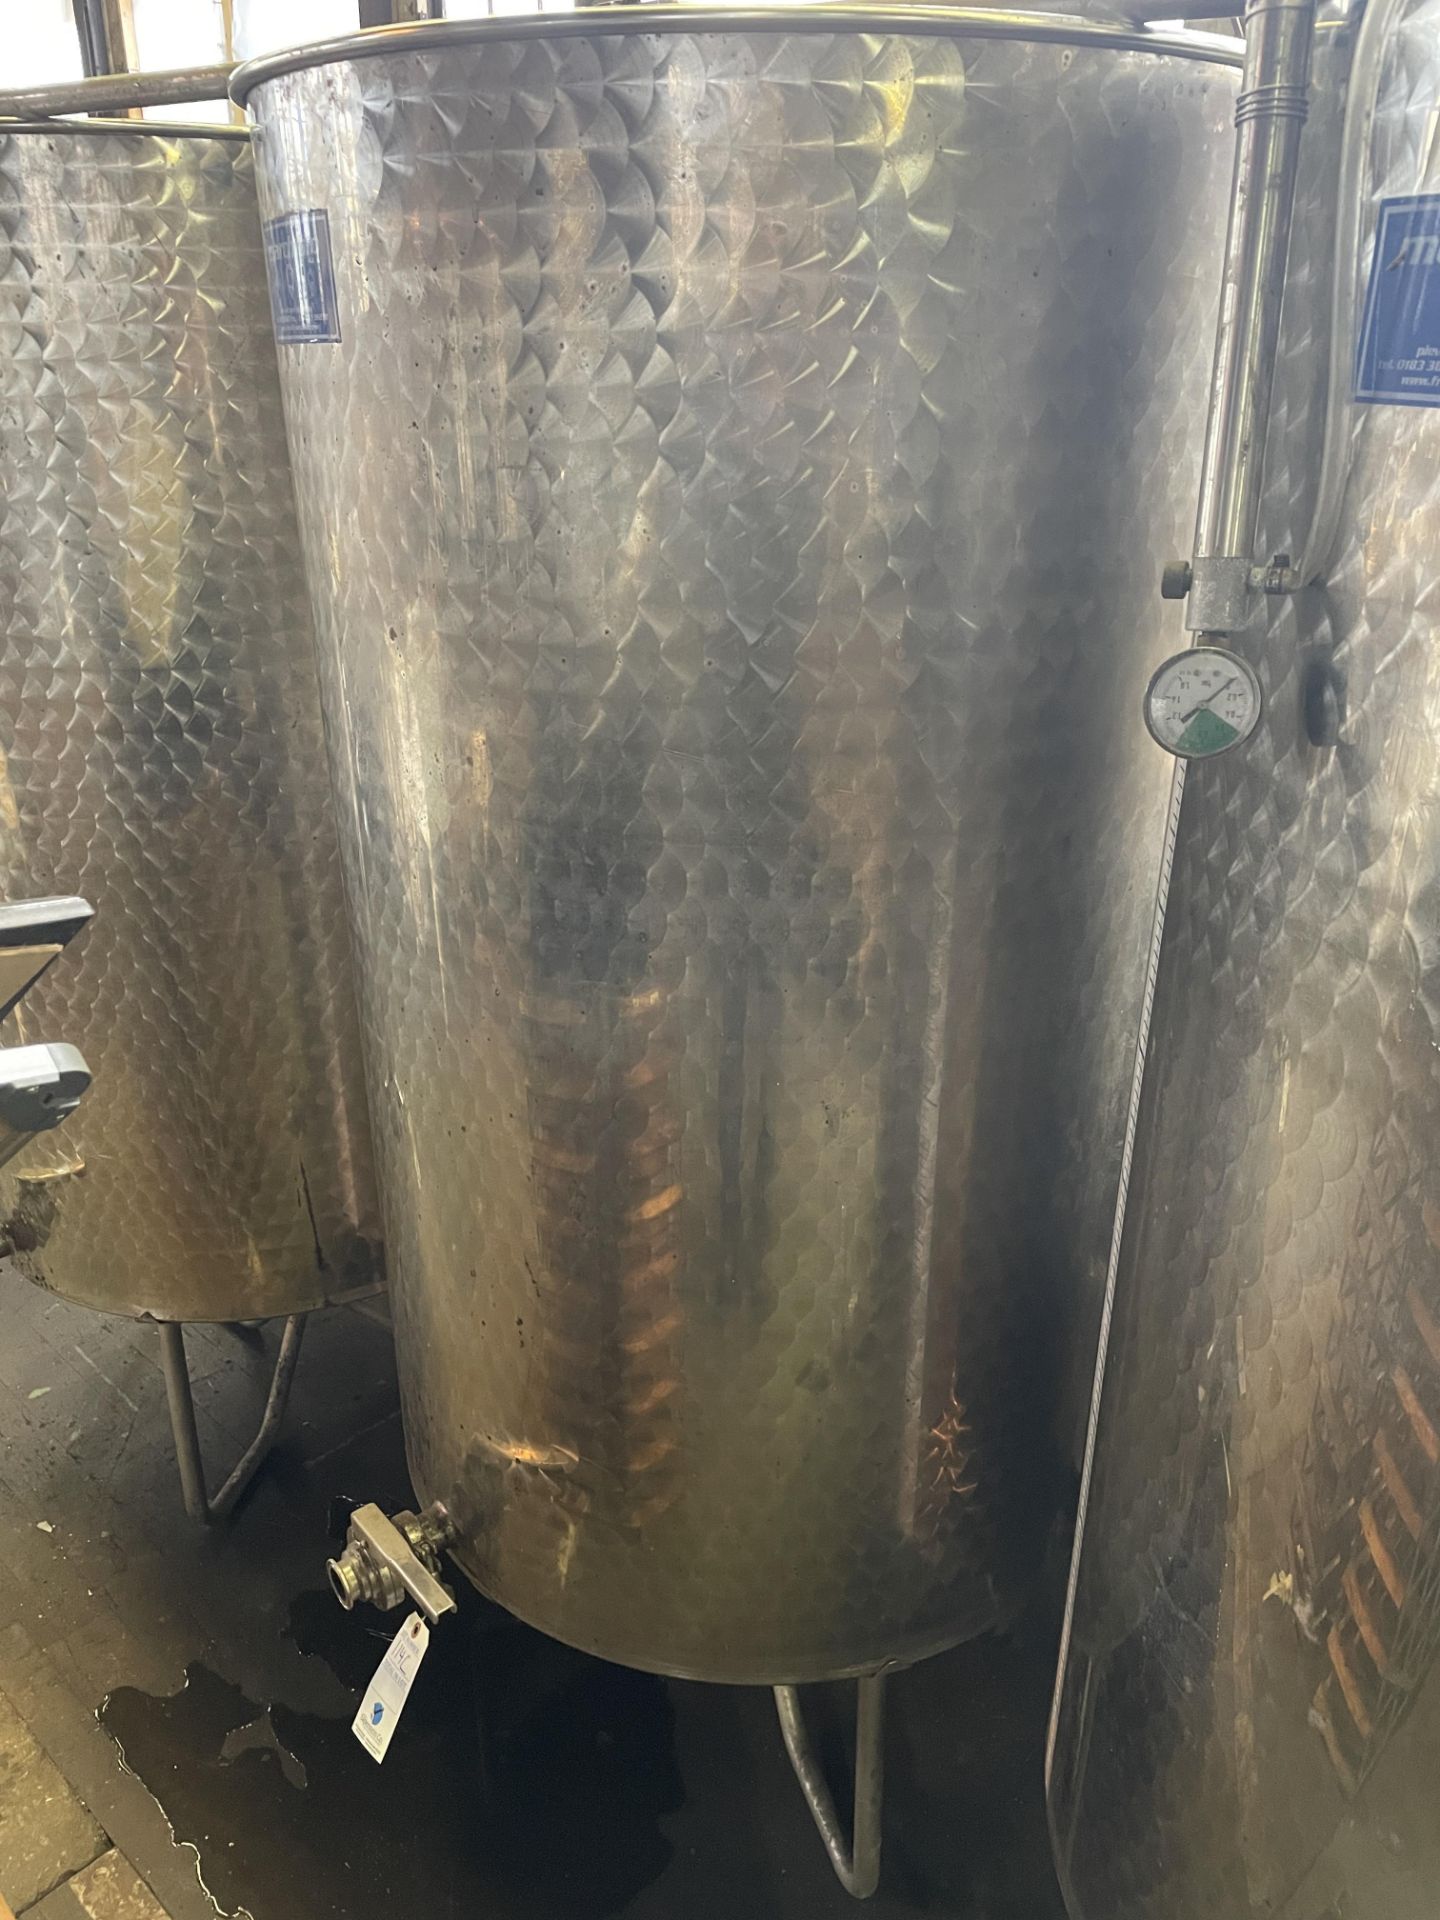 Marchisio 7 BBL (217 Gallon) Wine Fermenting Tanks (Located In Winchendon) - Image 2 of 4